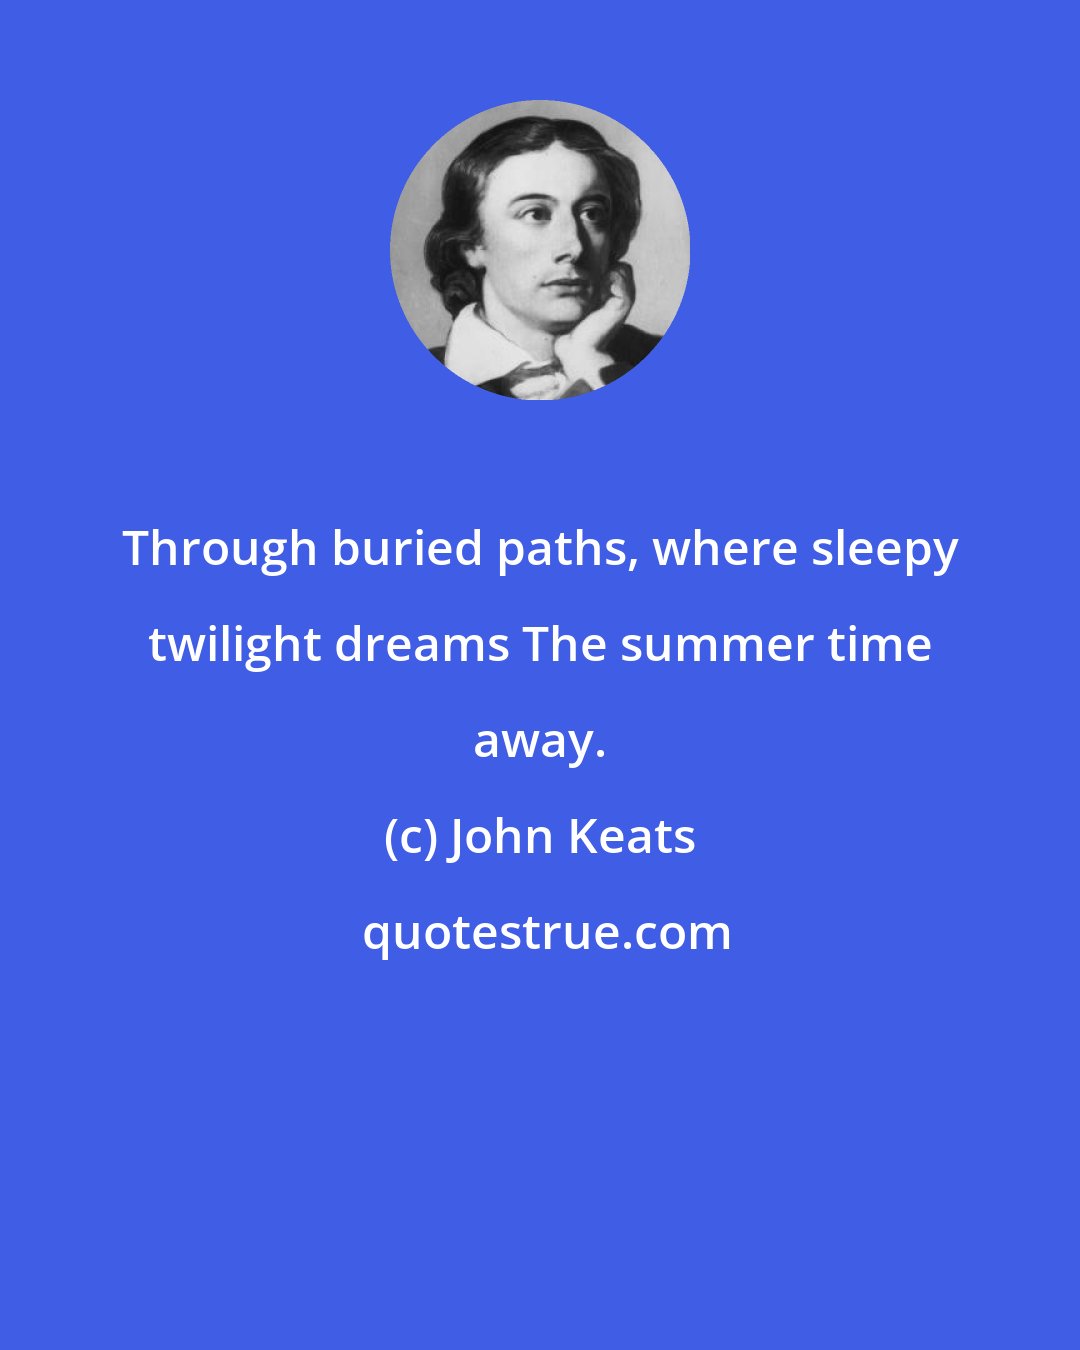 John Keats: Through buried paths, where sleepy twilight dreams The summer time away.